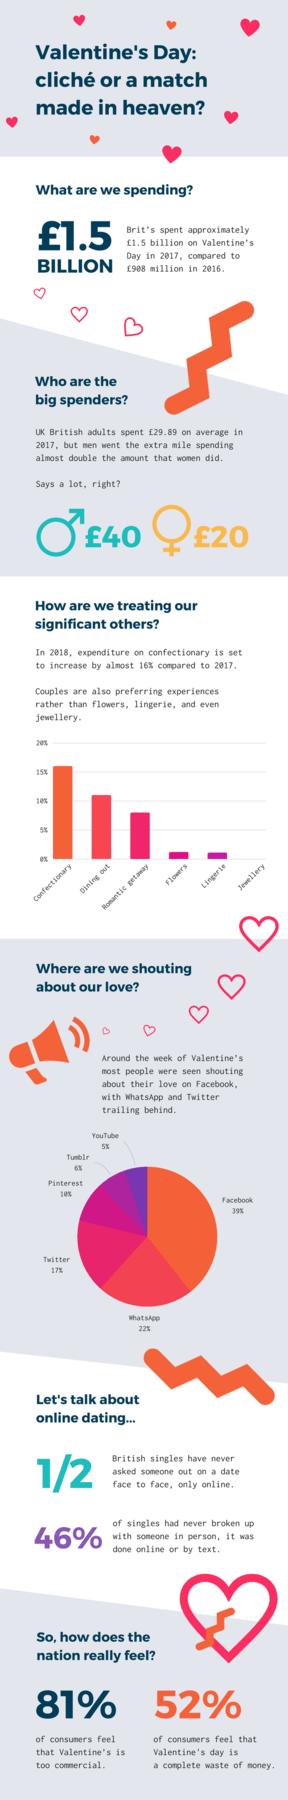 Infographic Valentine's spending in the uk